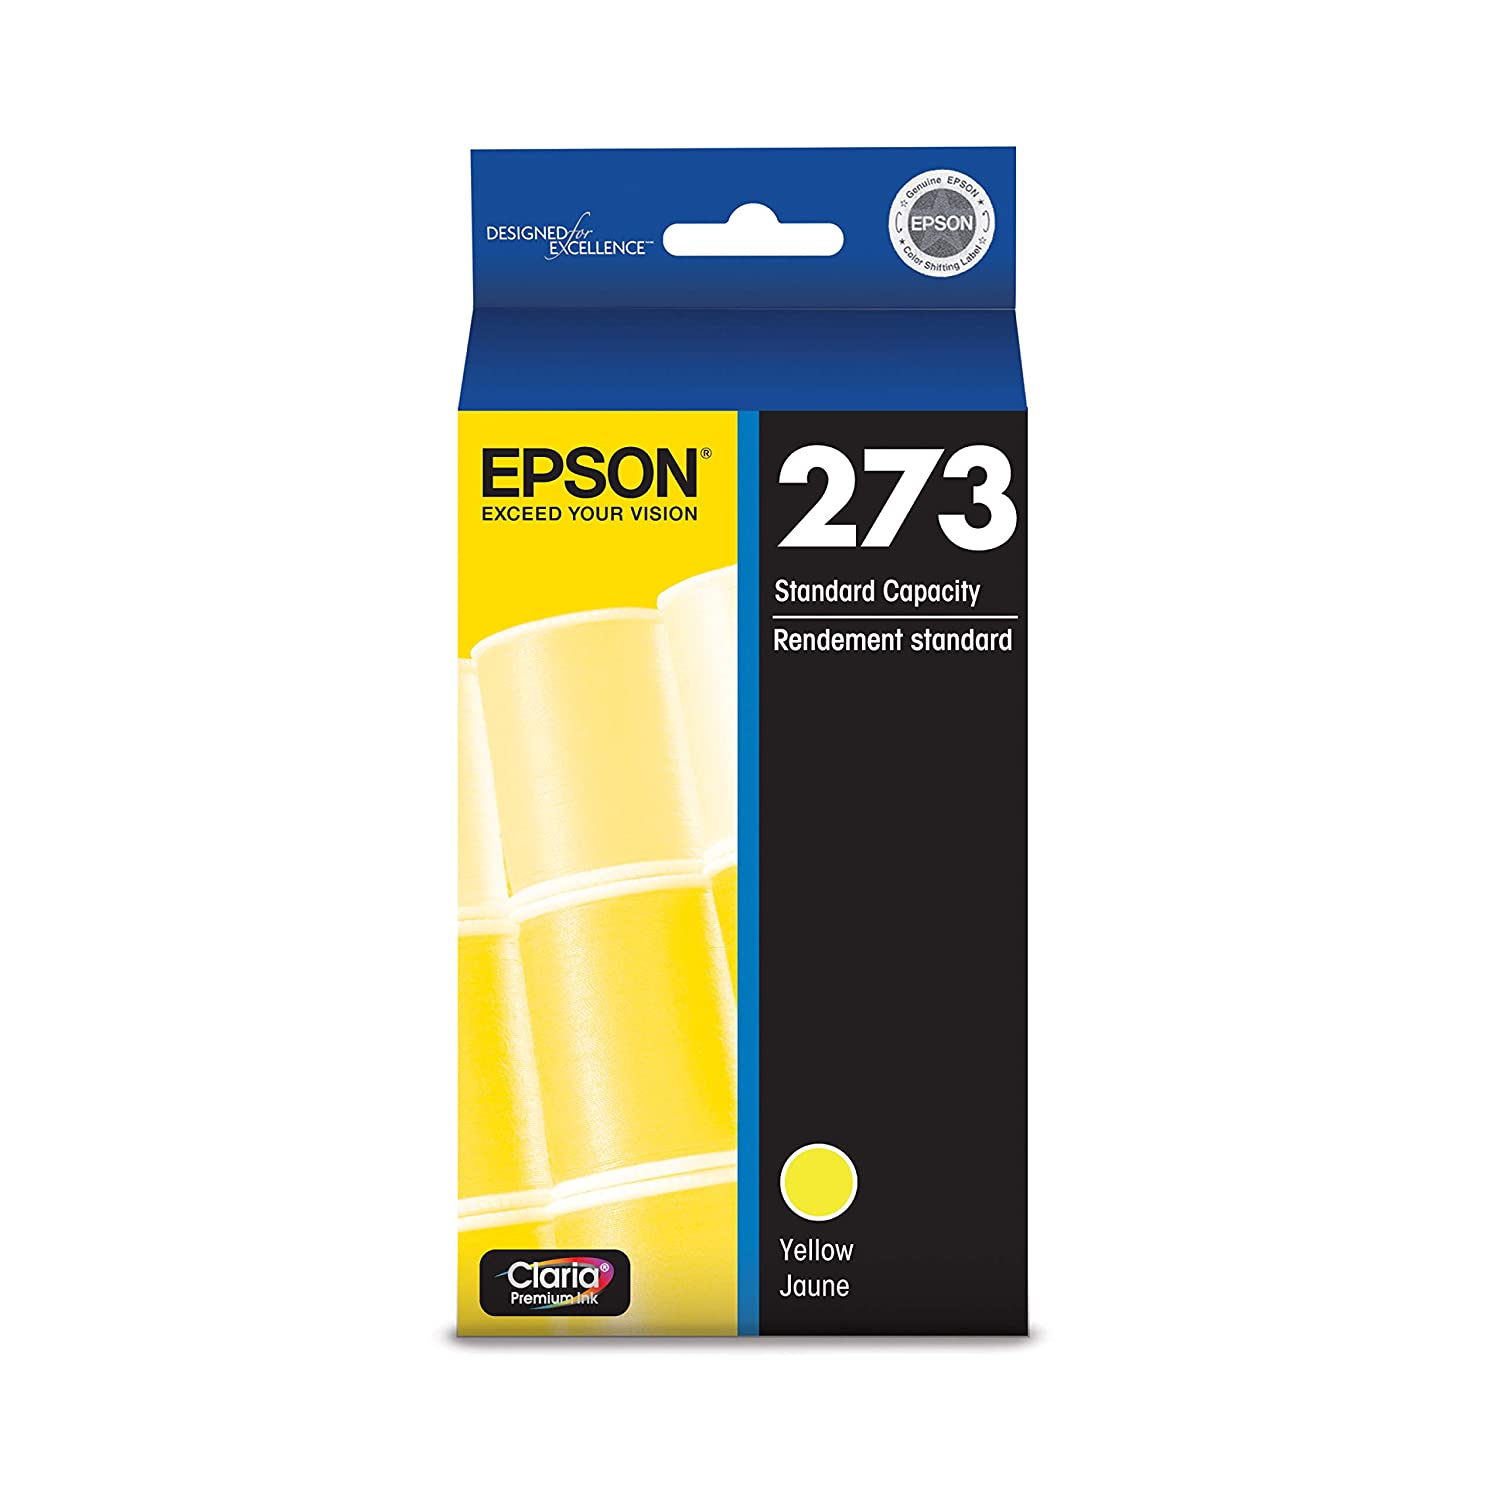 Absolute Toner Epson 273 Original Genuine OEM Yellow Ink Cartridge | T273420S Original Epson Cartridges